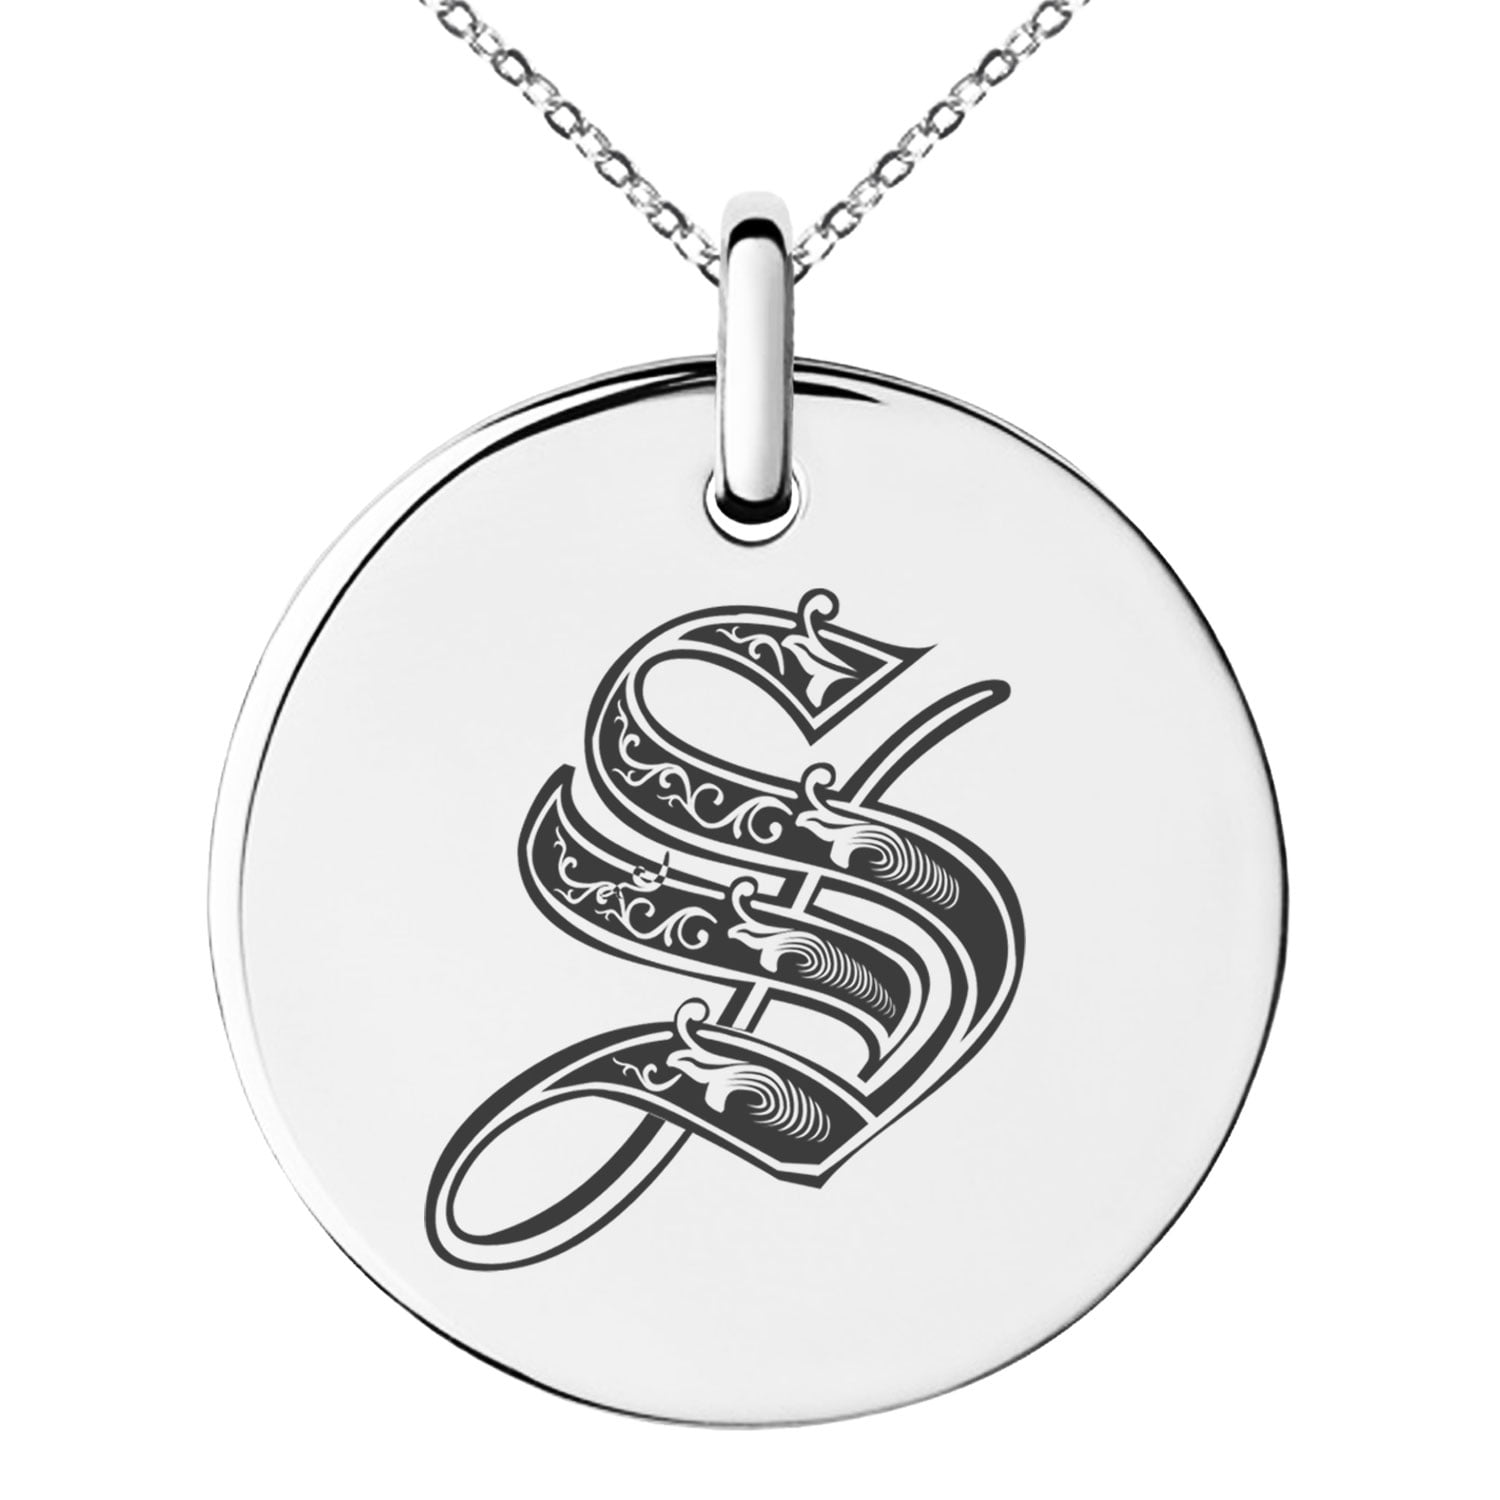 animal necklace llama charm initial necklace personalized necklace Llama necklace initial charm monogram